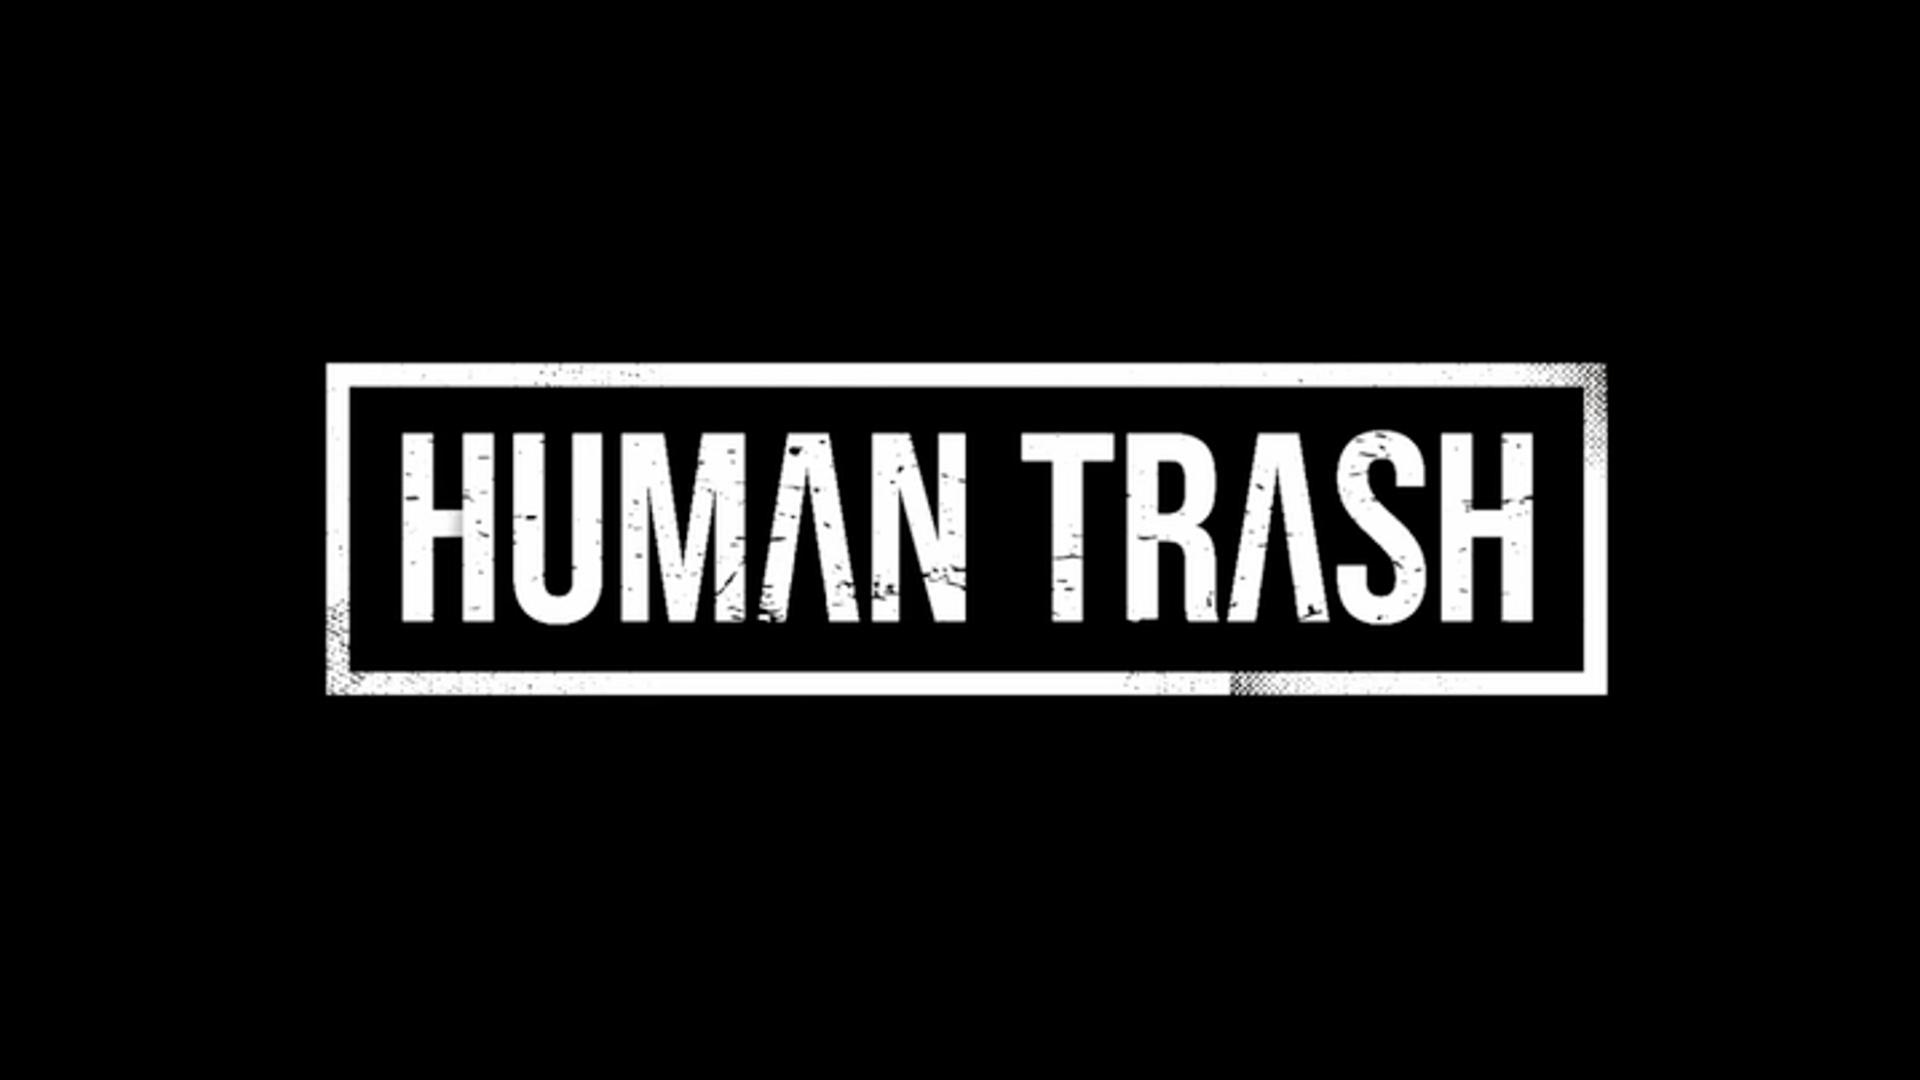 Human Trash